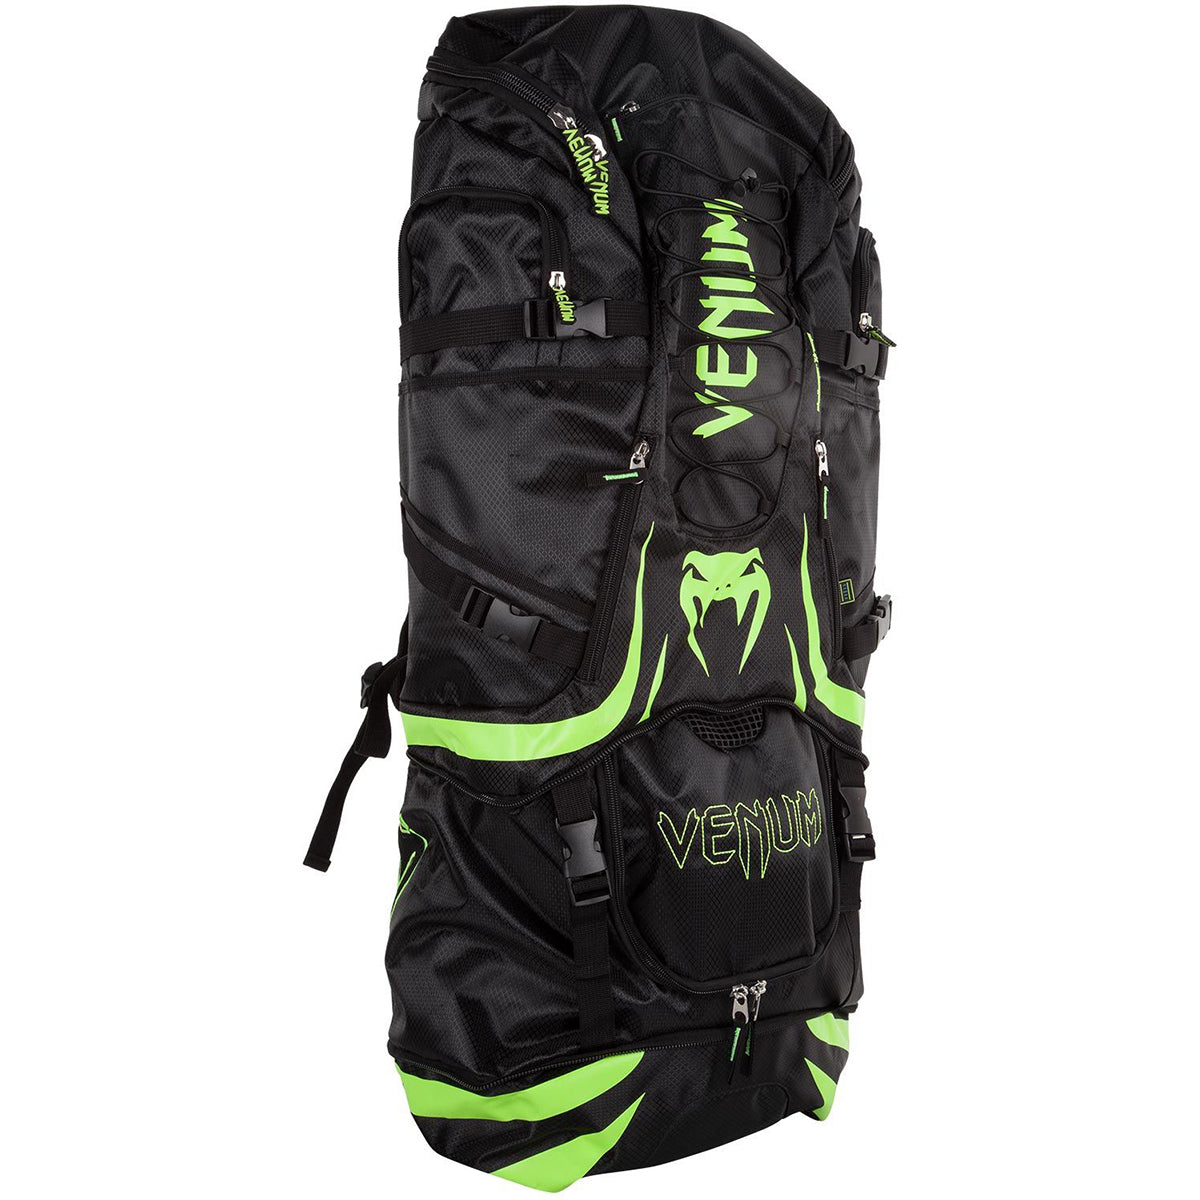 Venum Challenger Xtreme Backpack - Black/Neo Yellow Venum